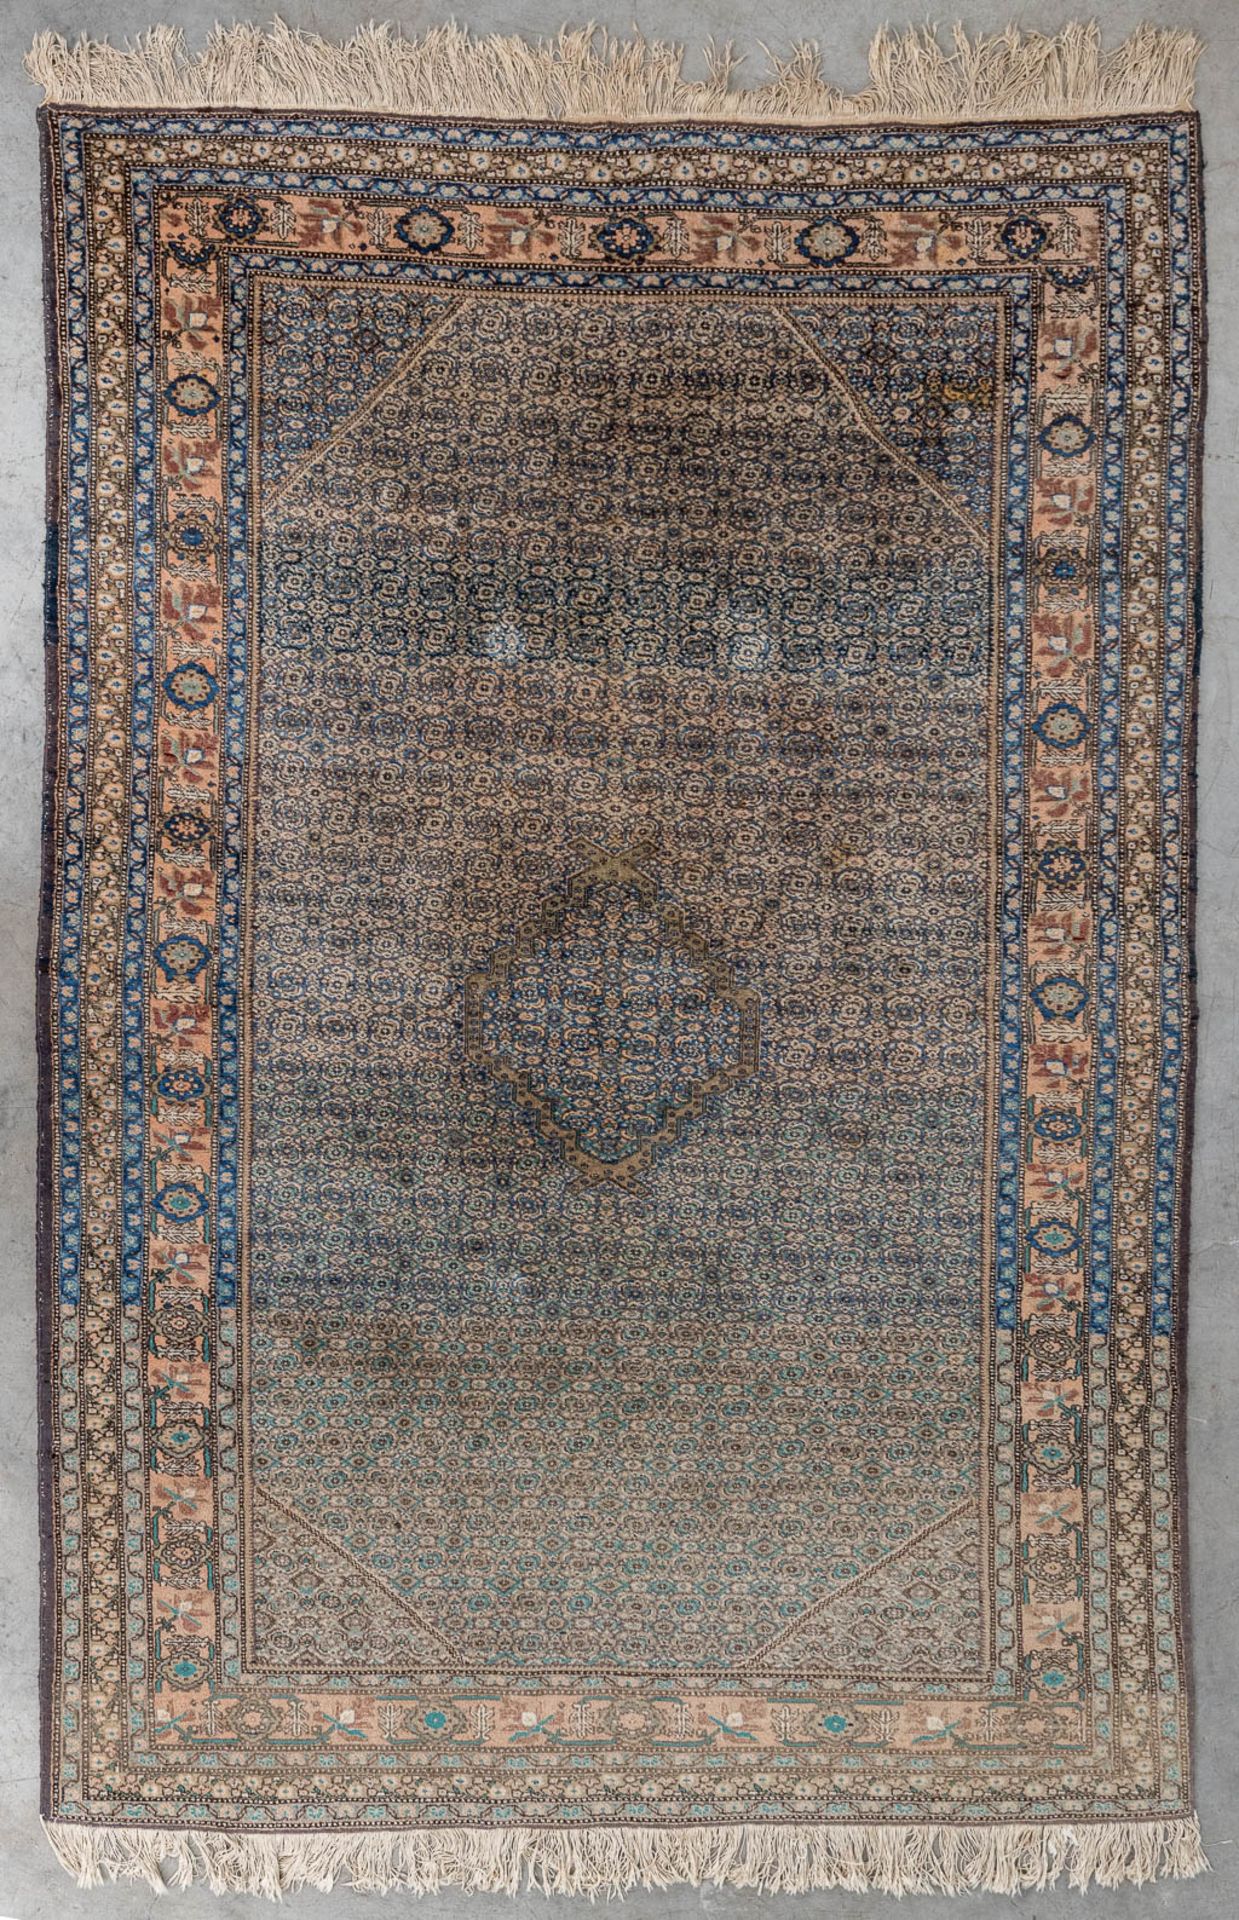 An Oriental hand-made carpet, Ghoum. (L:274 x W:174 cm)